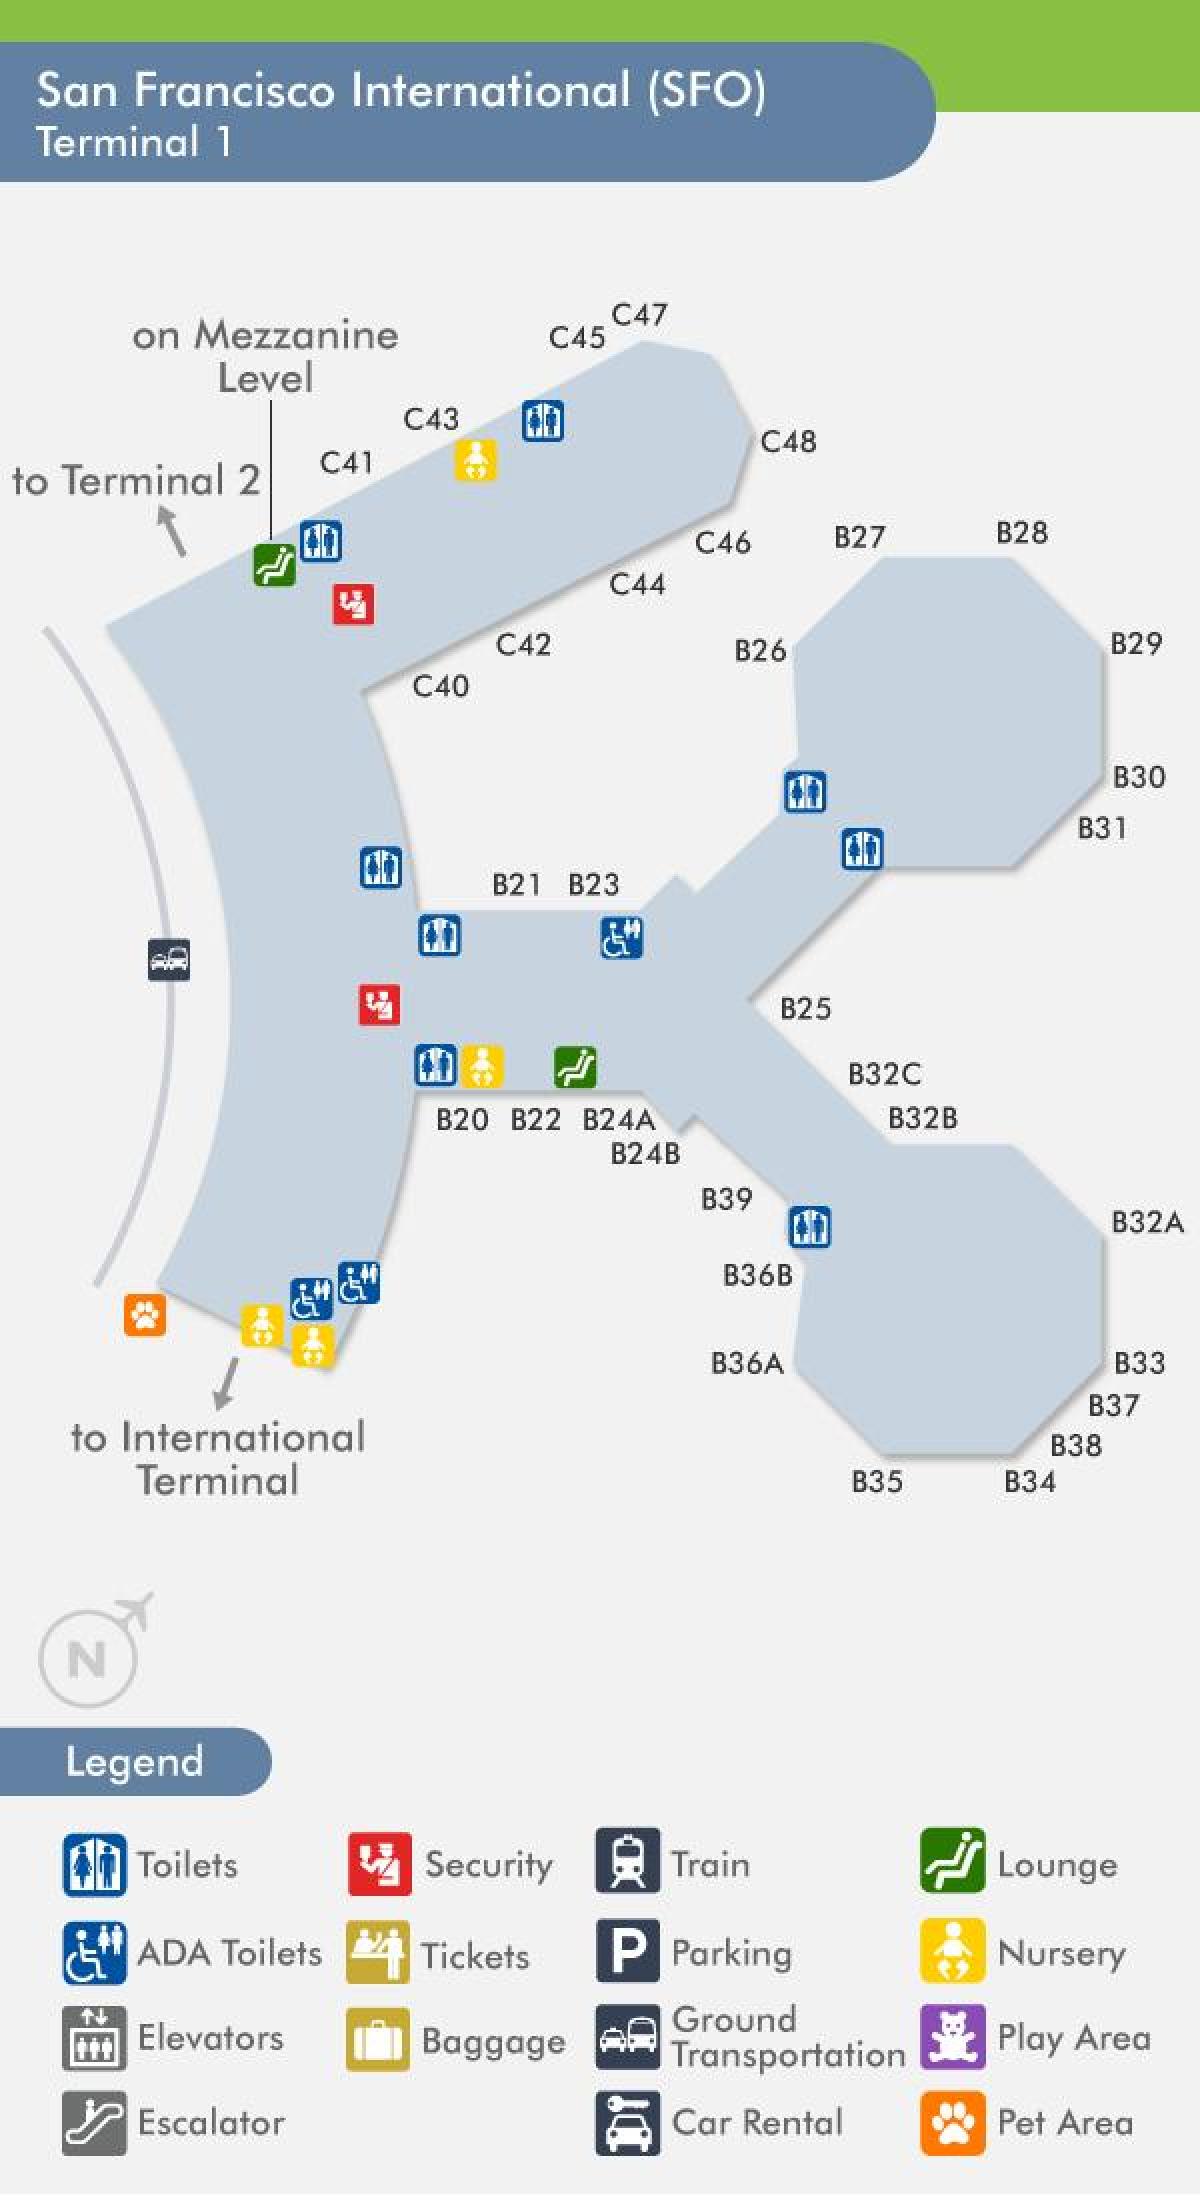 San Francisco airport terminal 1 χάρτης